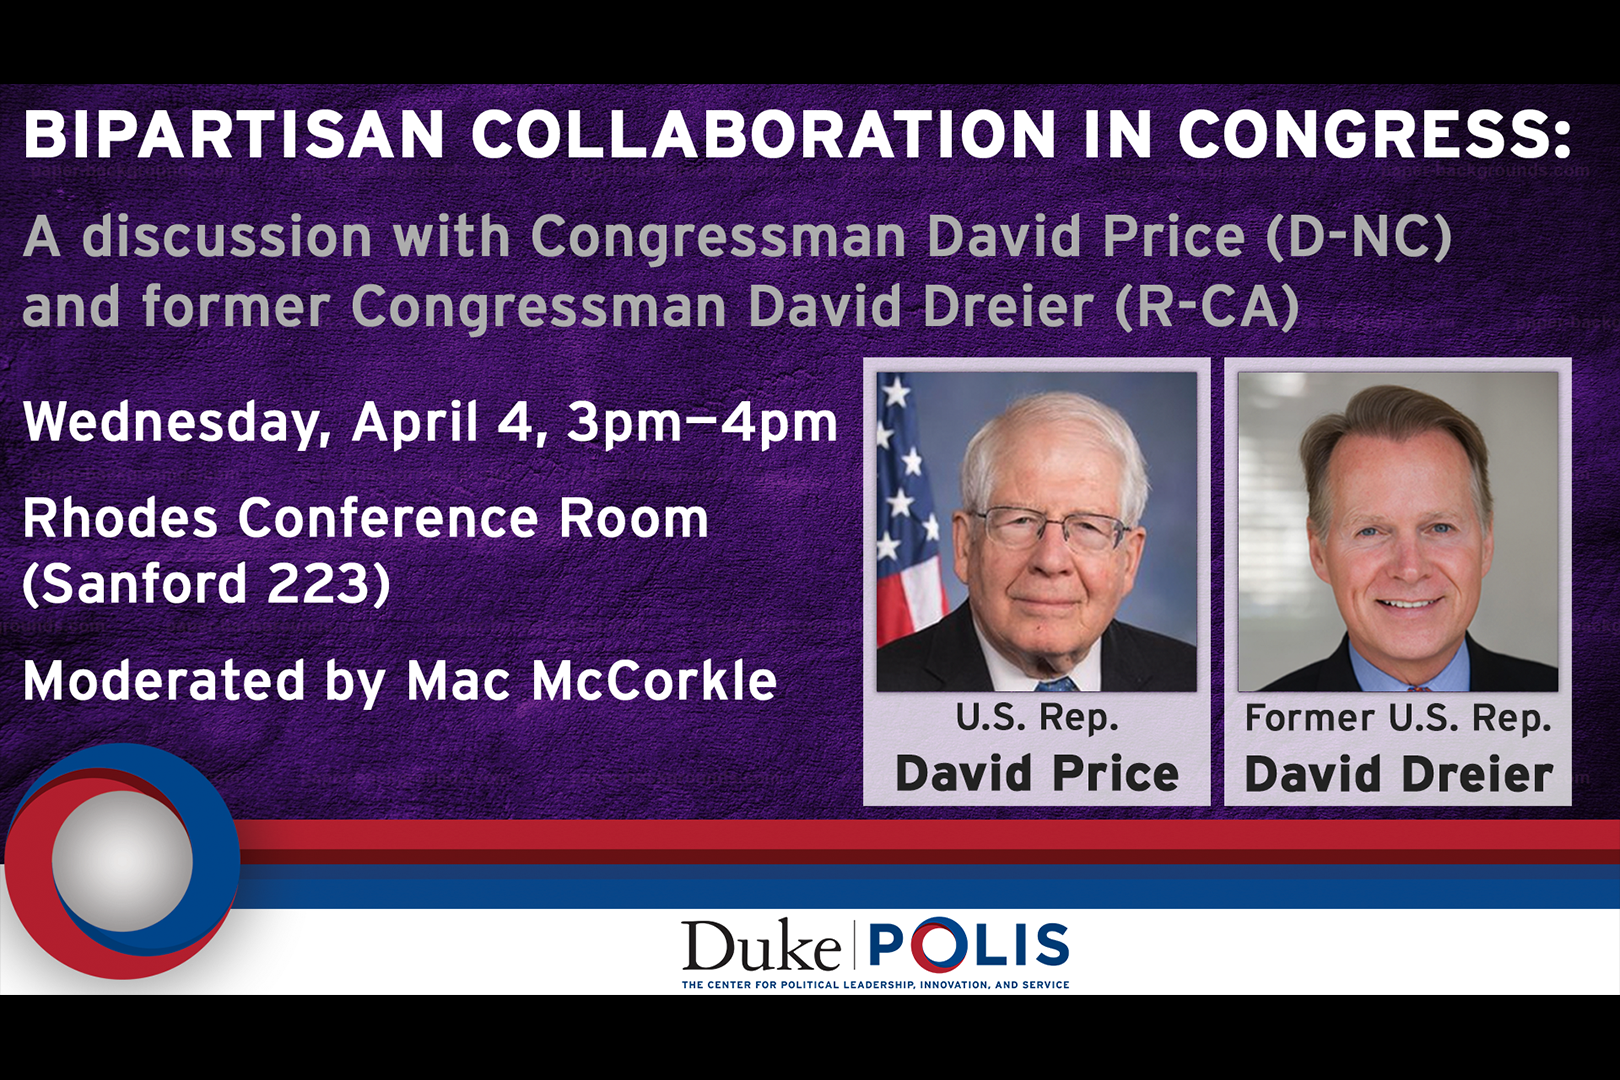 David Price and David Dreier event flyer